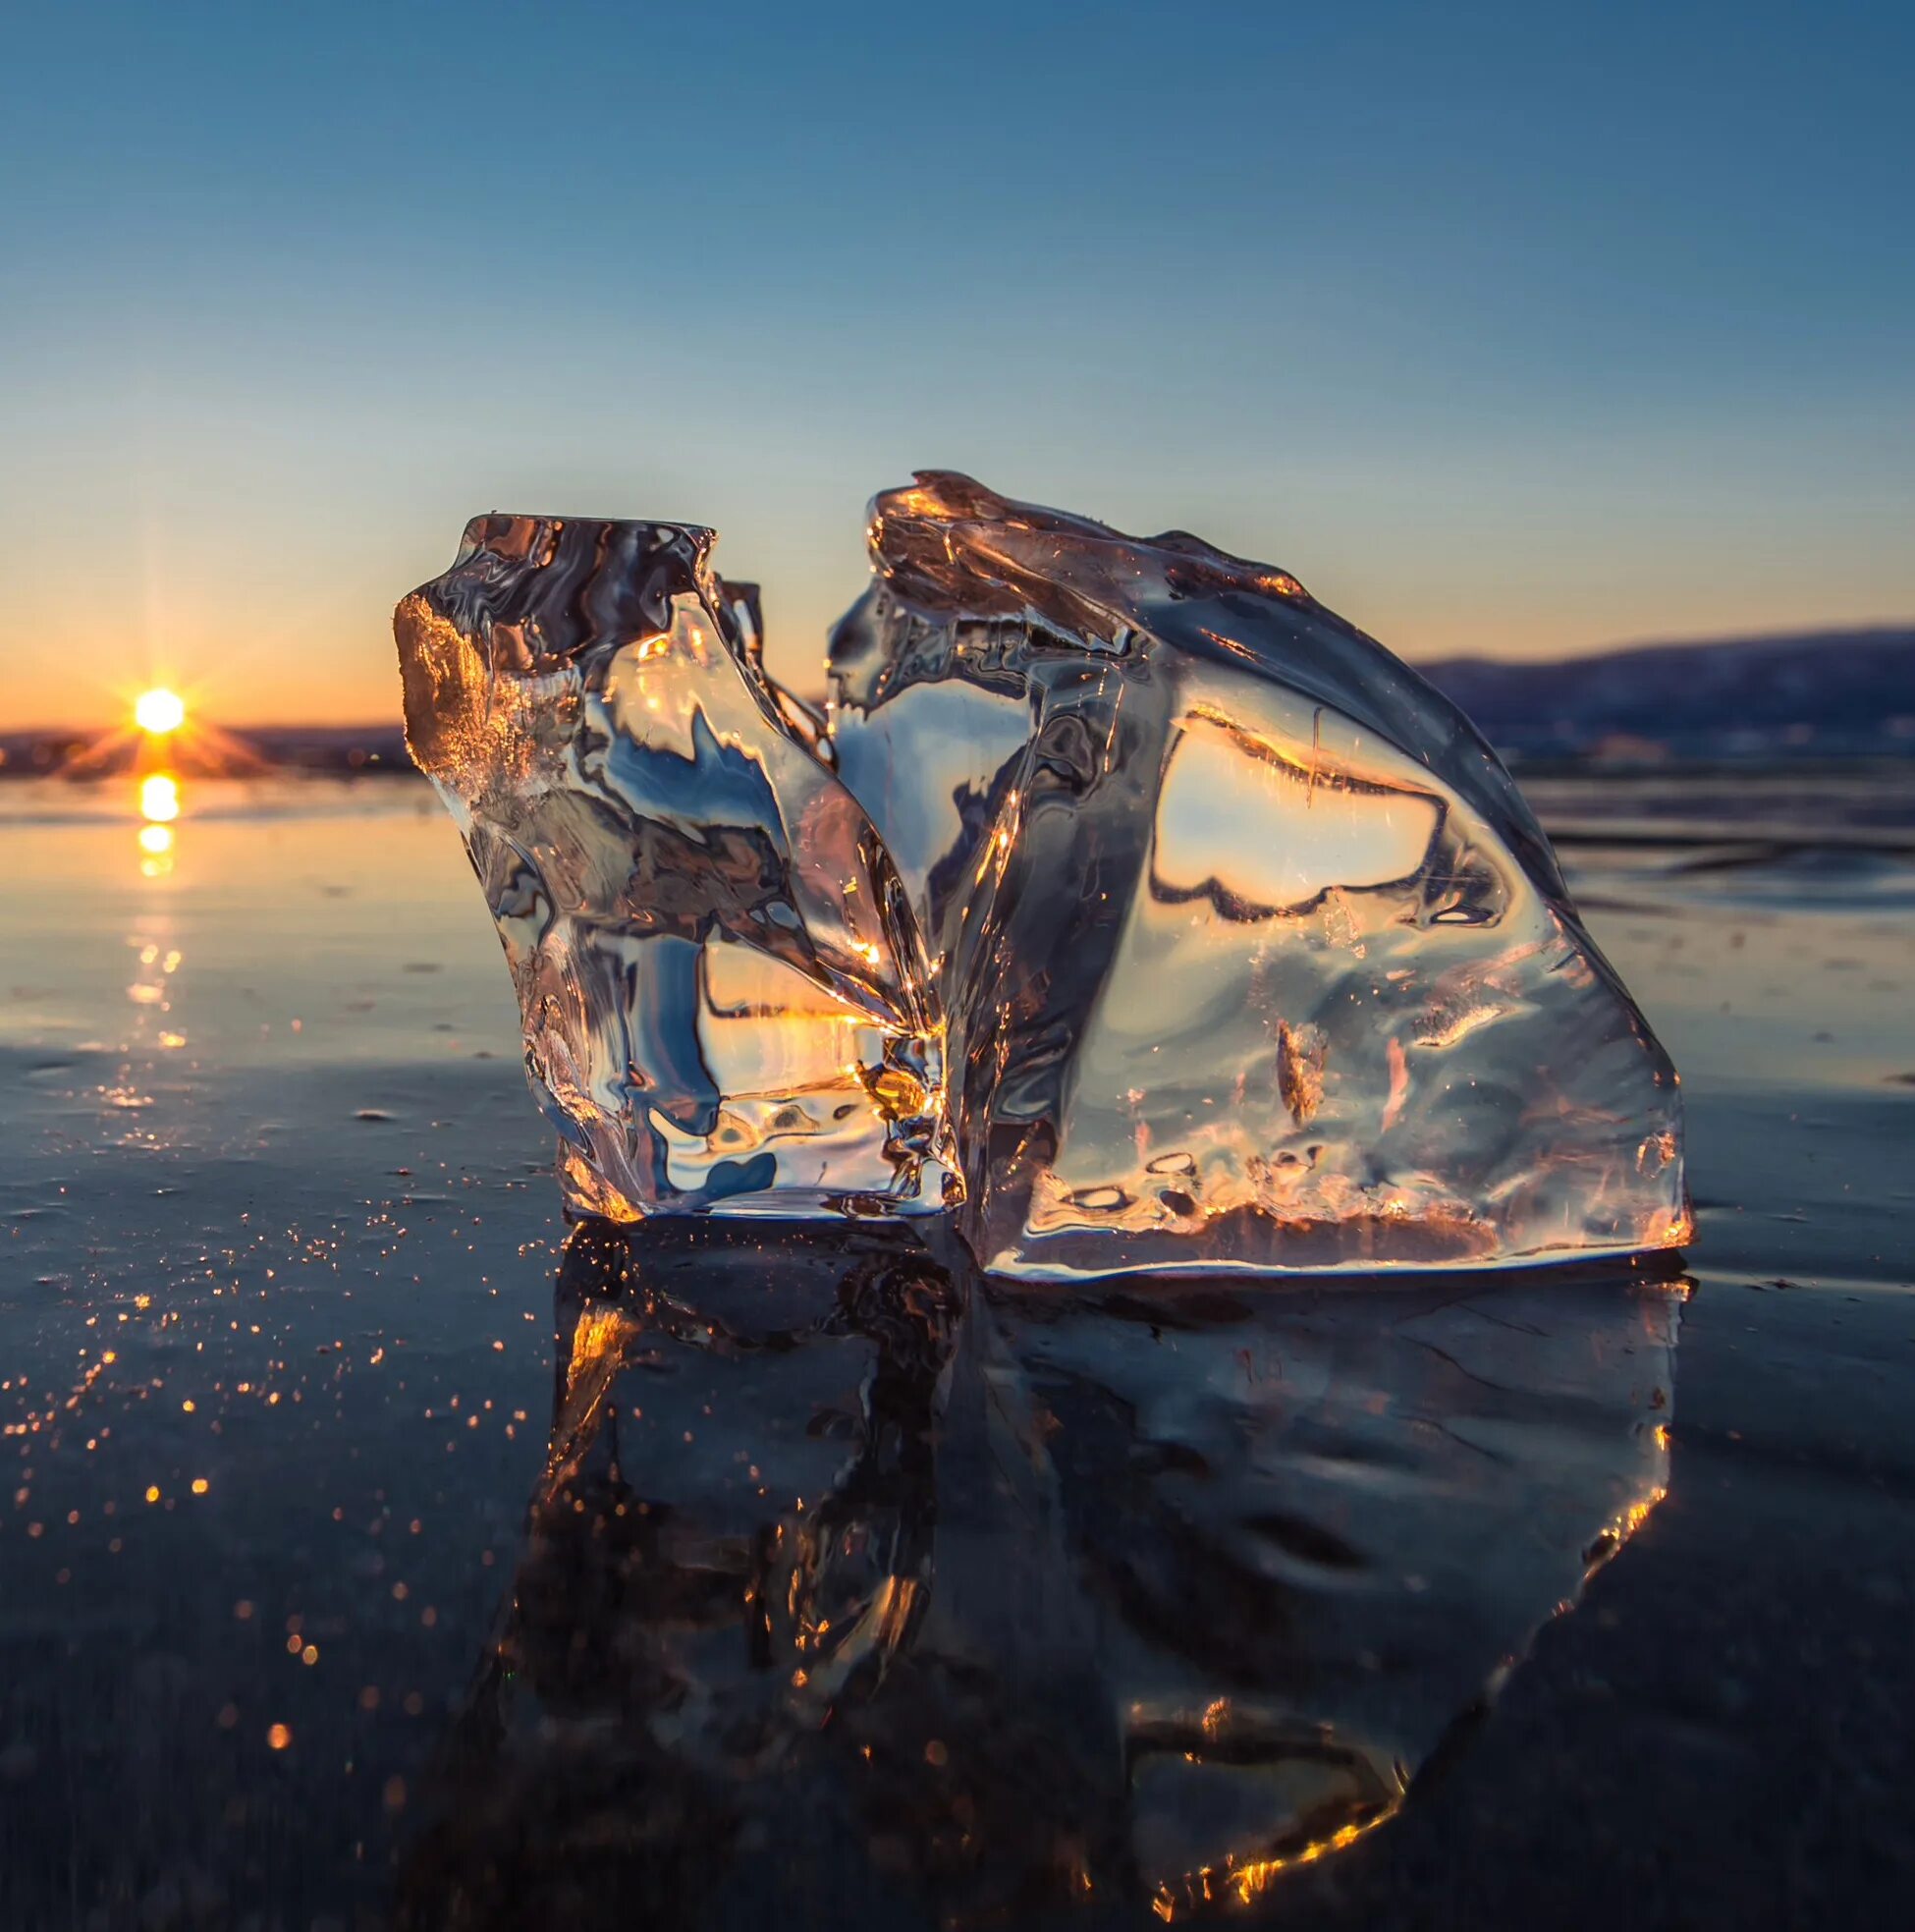 Воды байкала чисты и прозрачны. Лед Байкала. Прозрачный лед Байкала. Озеро Байкал прозрачный лед. Озеро Байкал зимой прозрачный лед.